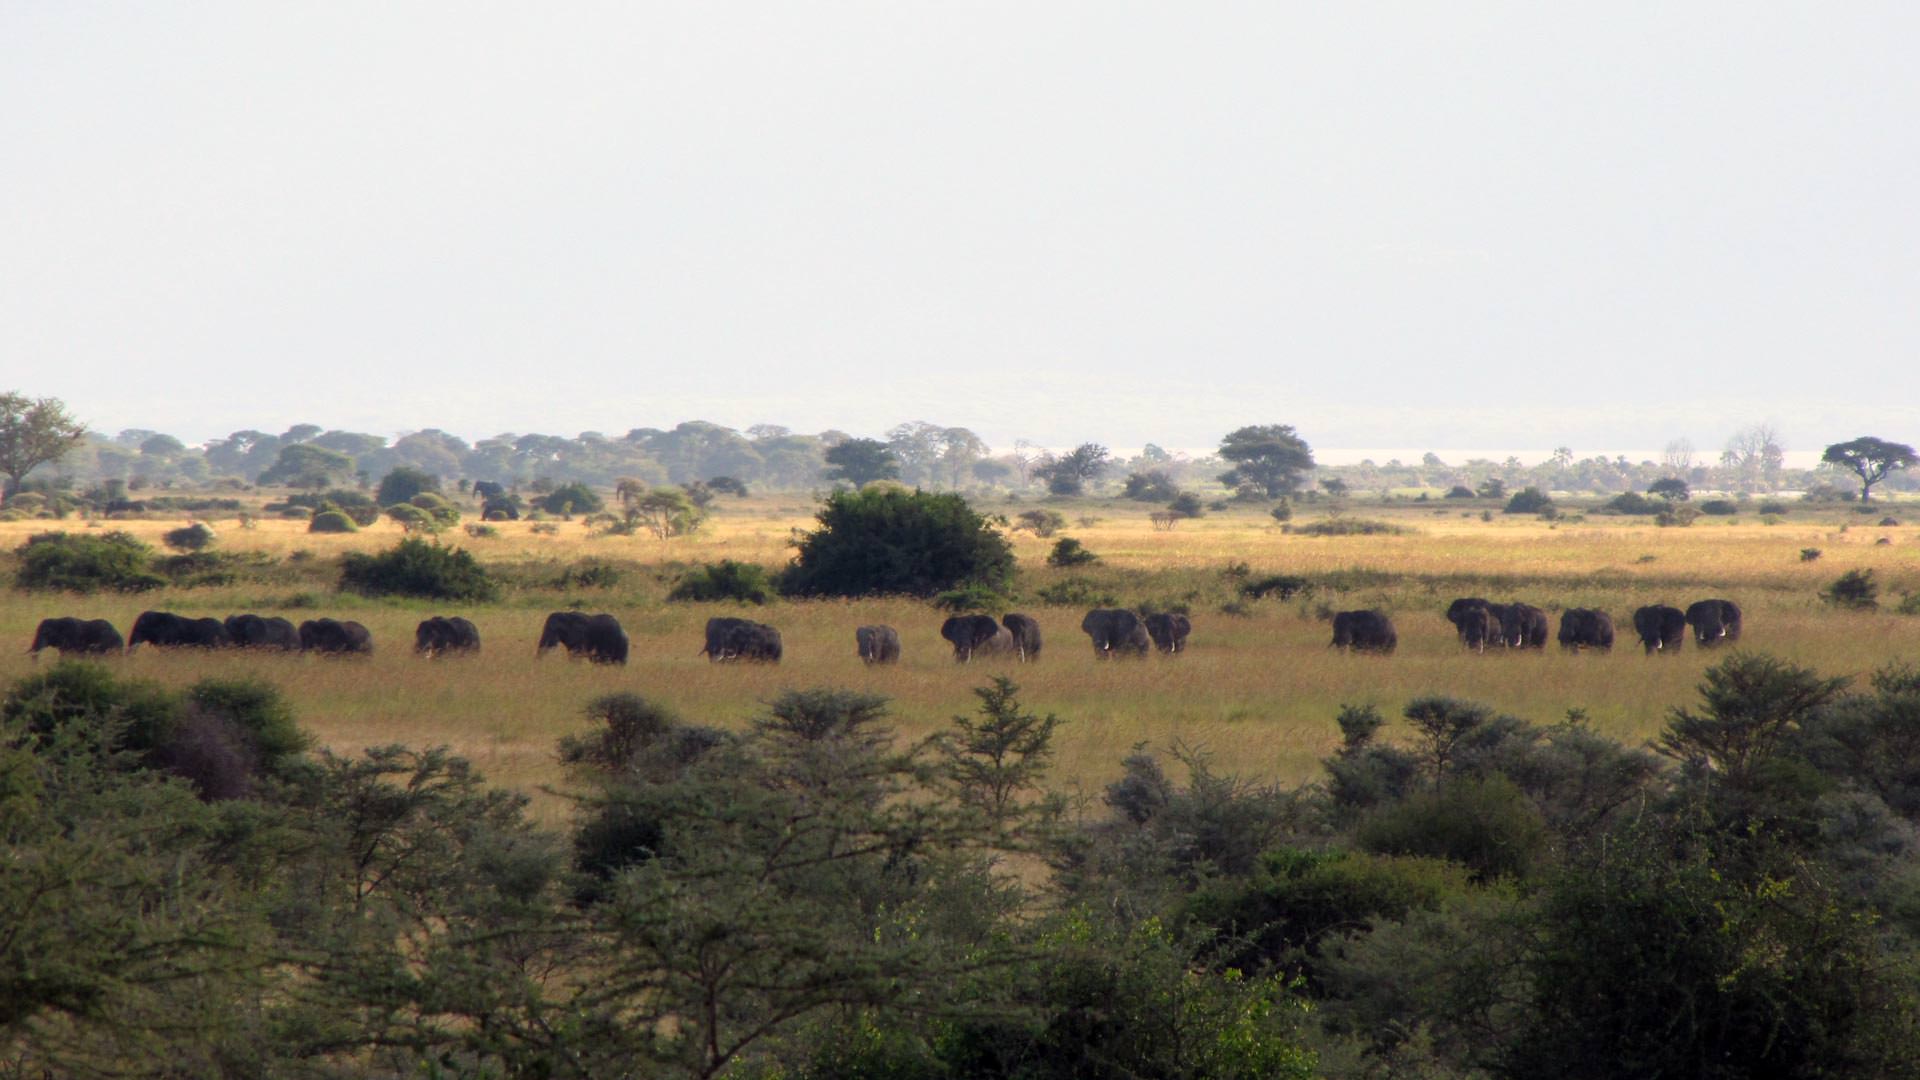 Elephant line - Manyara Ranch Conservancy